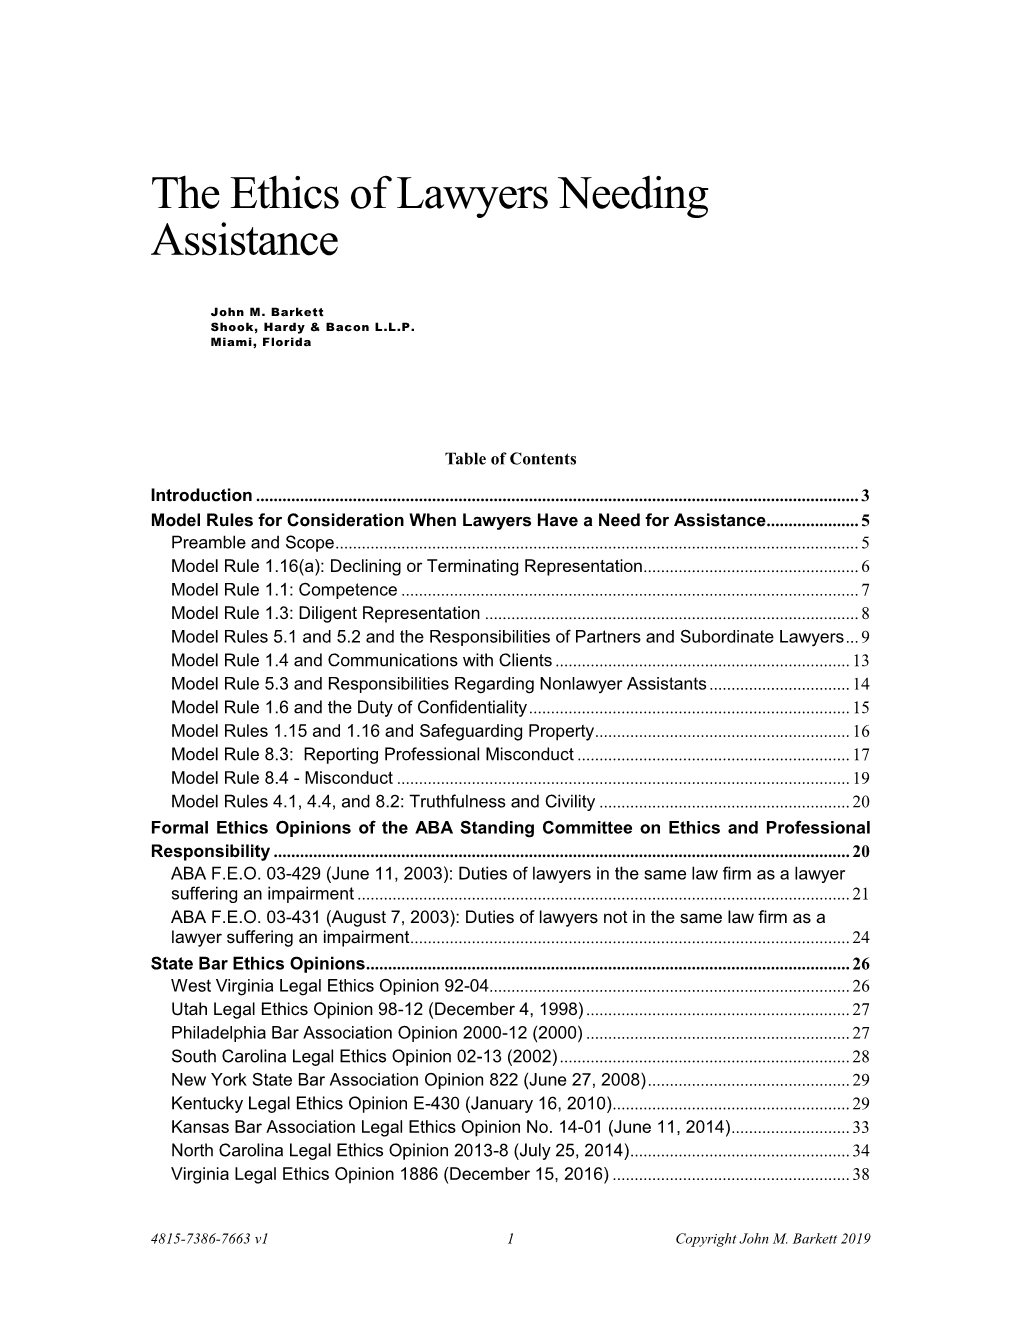 The Ethics of Lawyers Needing Assistance